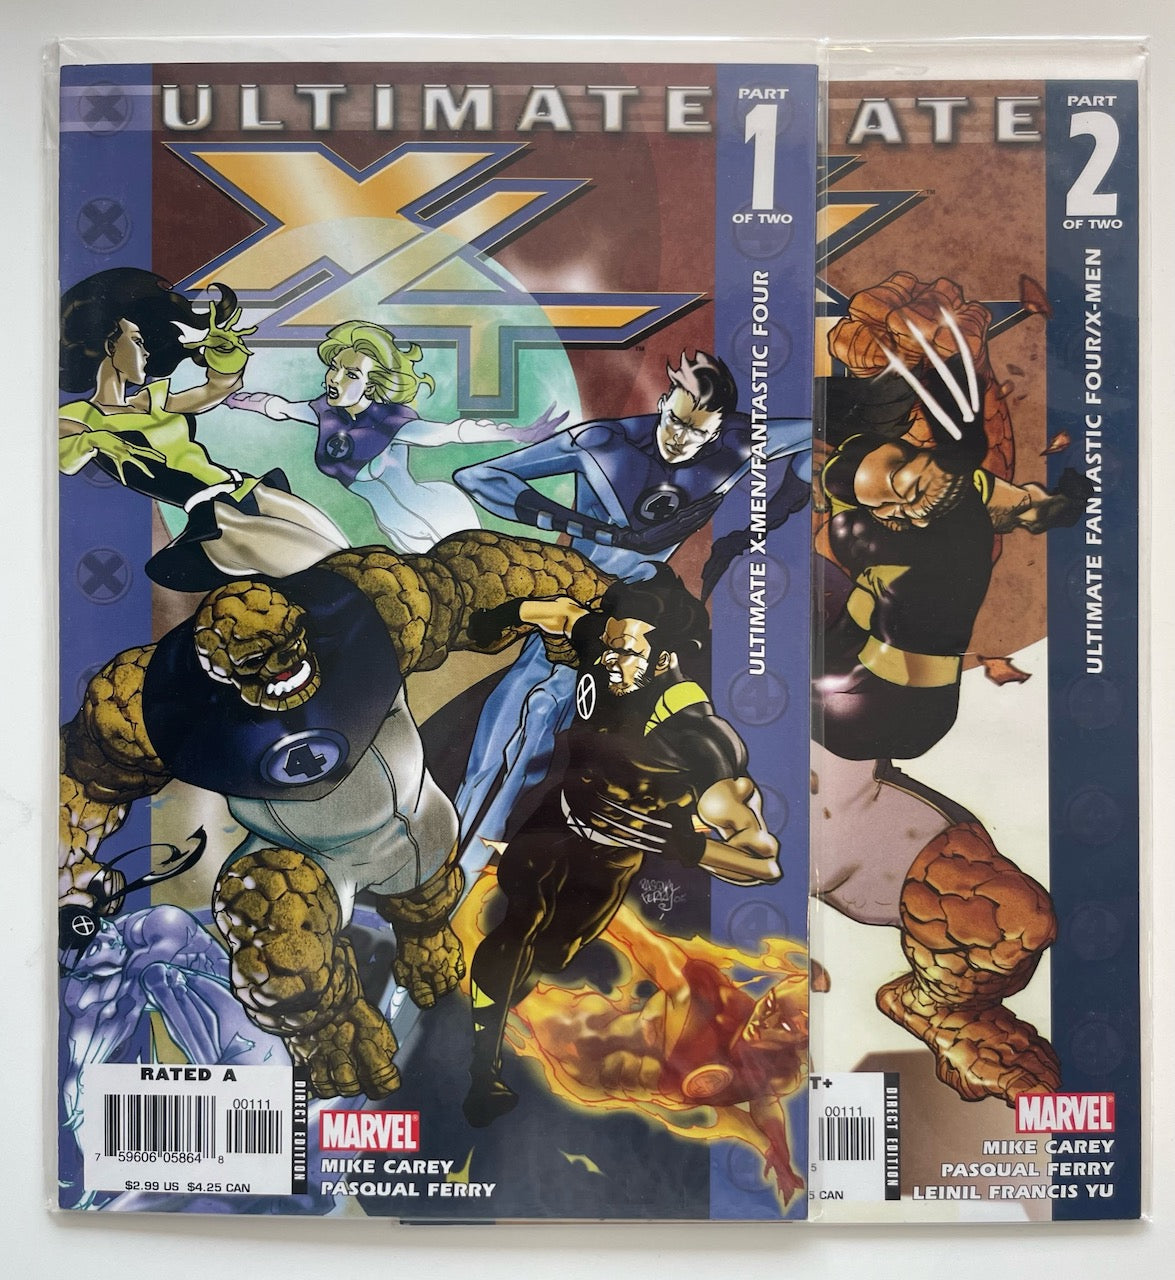 Ultimate X4 #1-2 Set